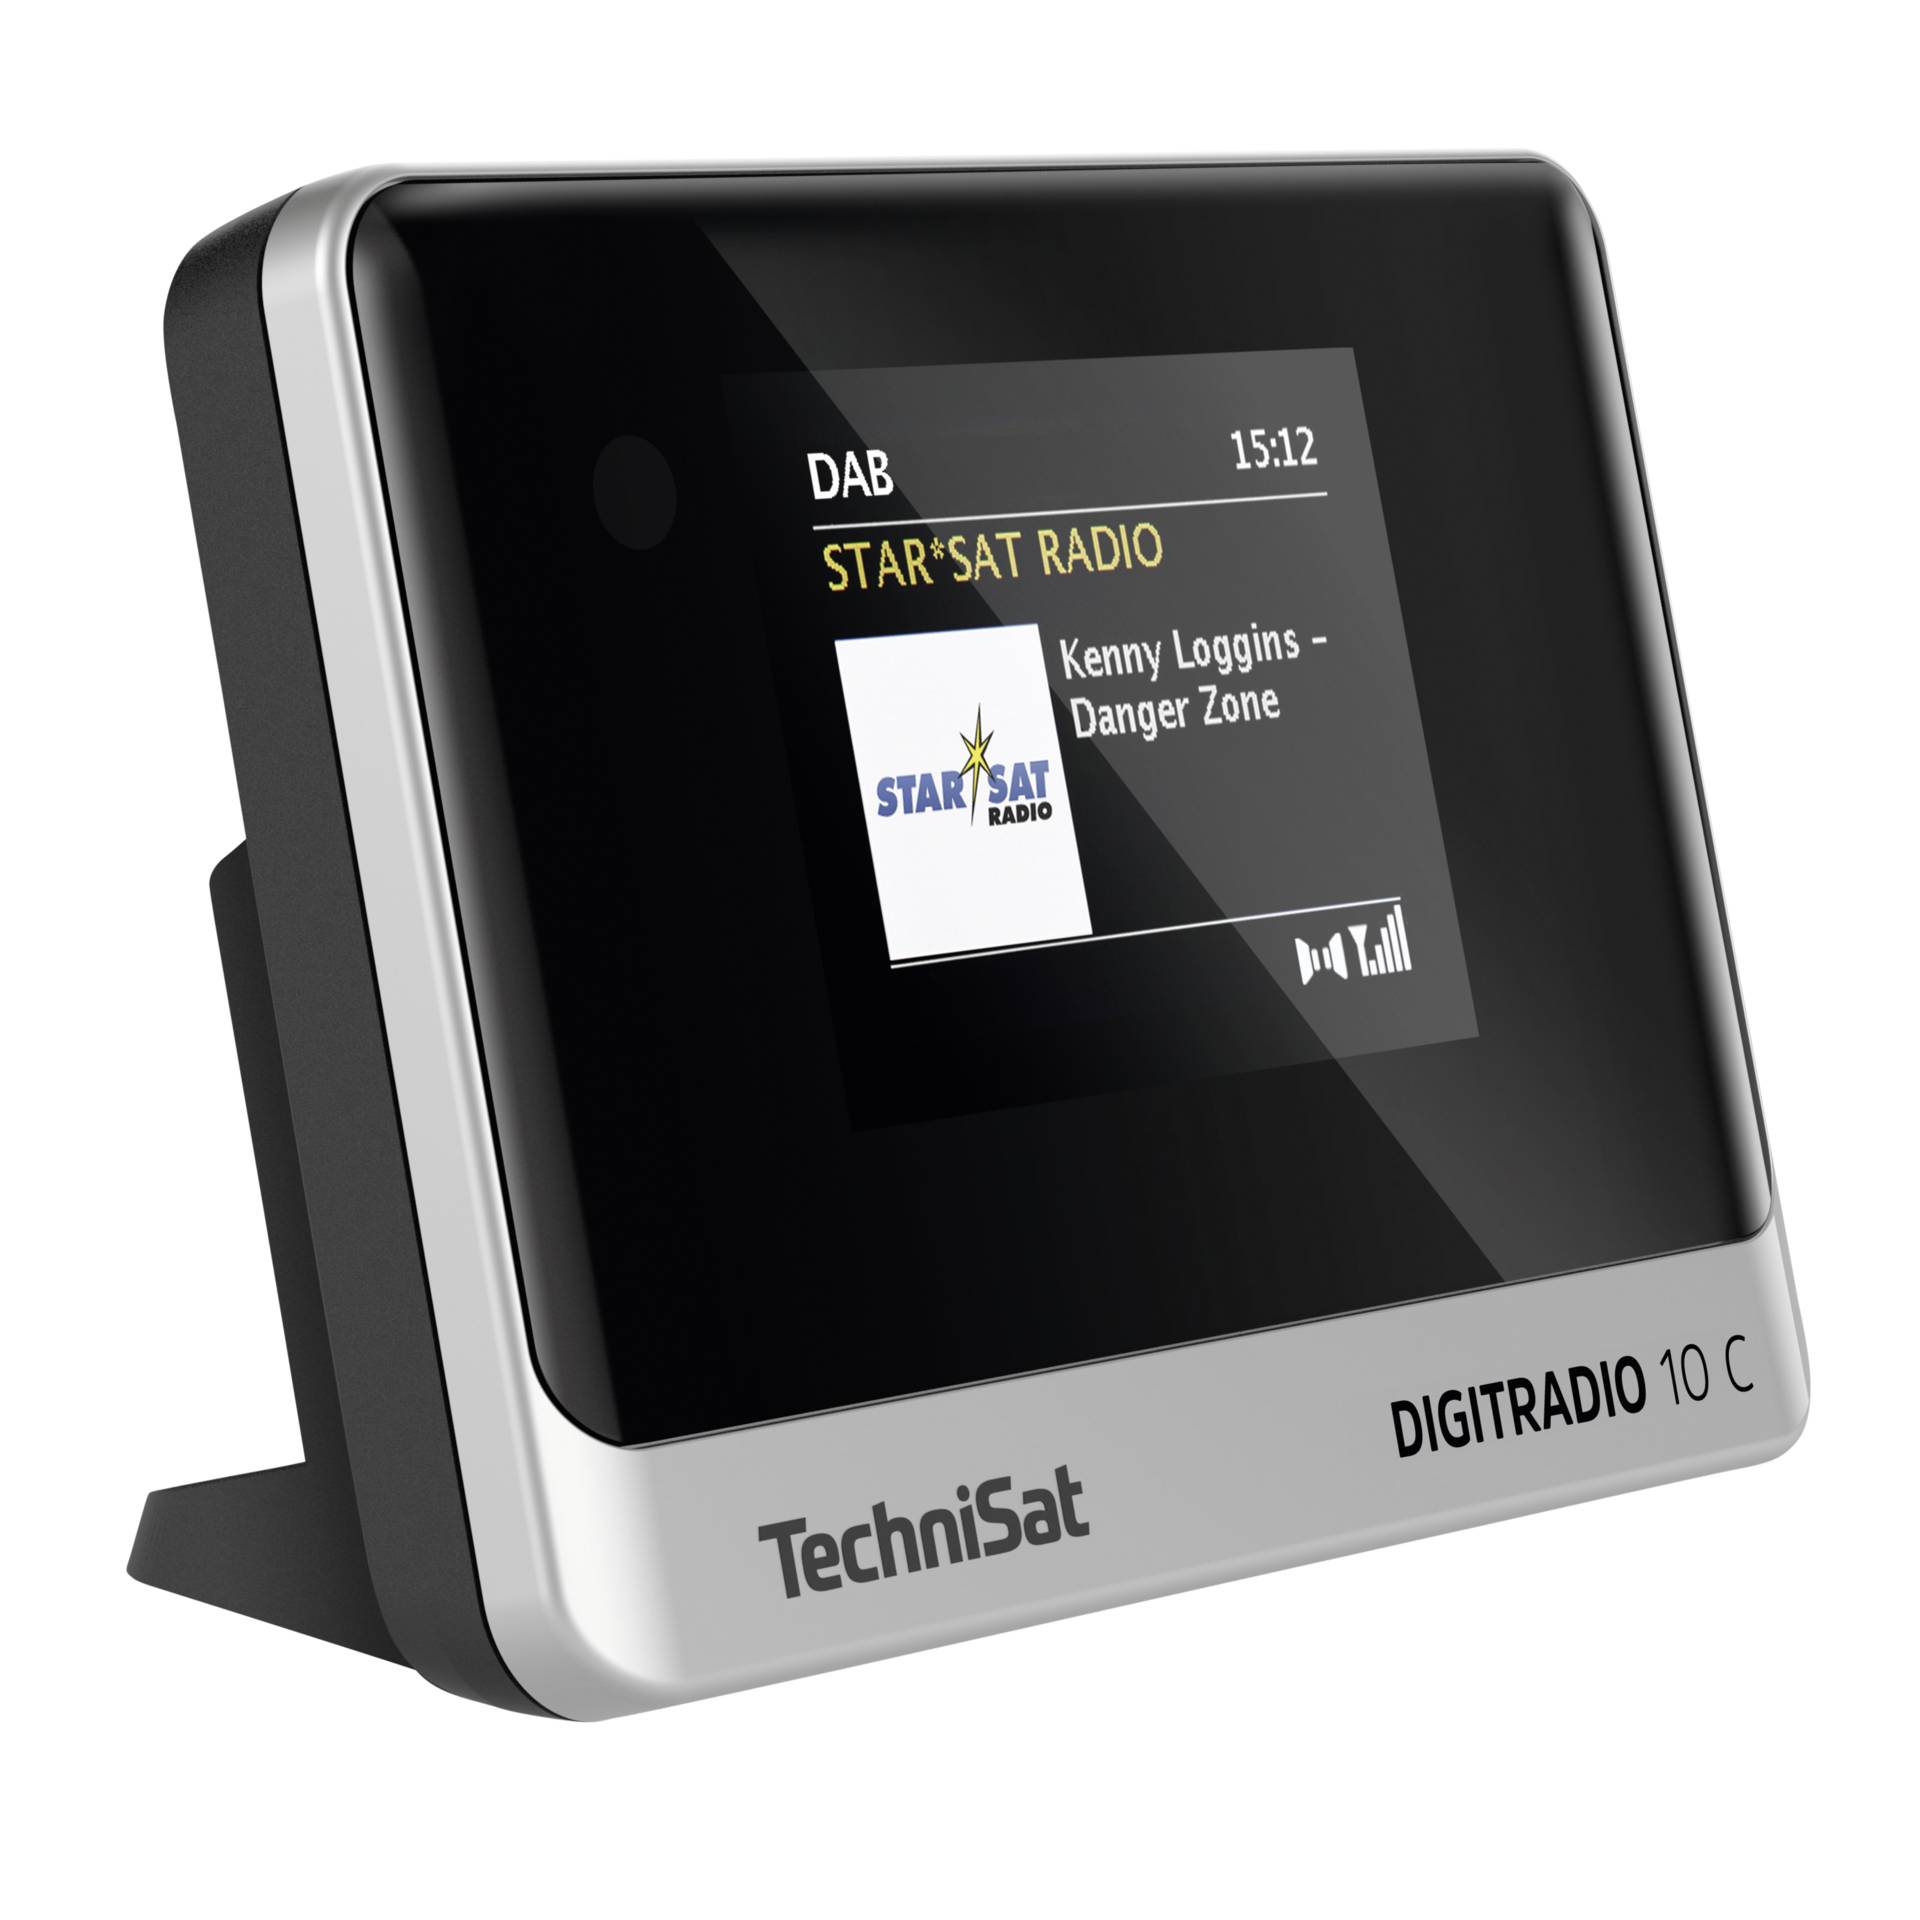 TechniSat DigitRadio 10 C, UKW, DAB, DAB+, Bluetooth 4.1 